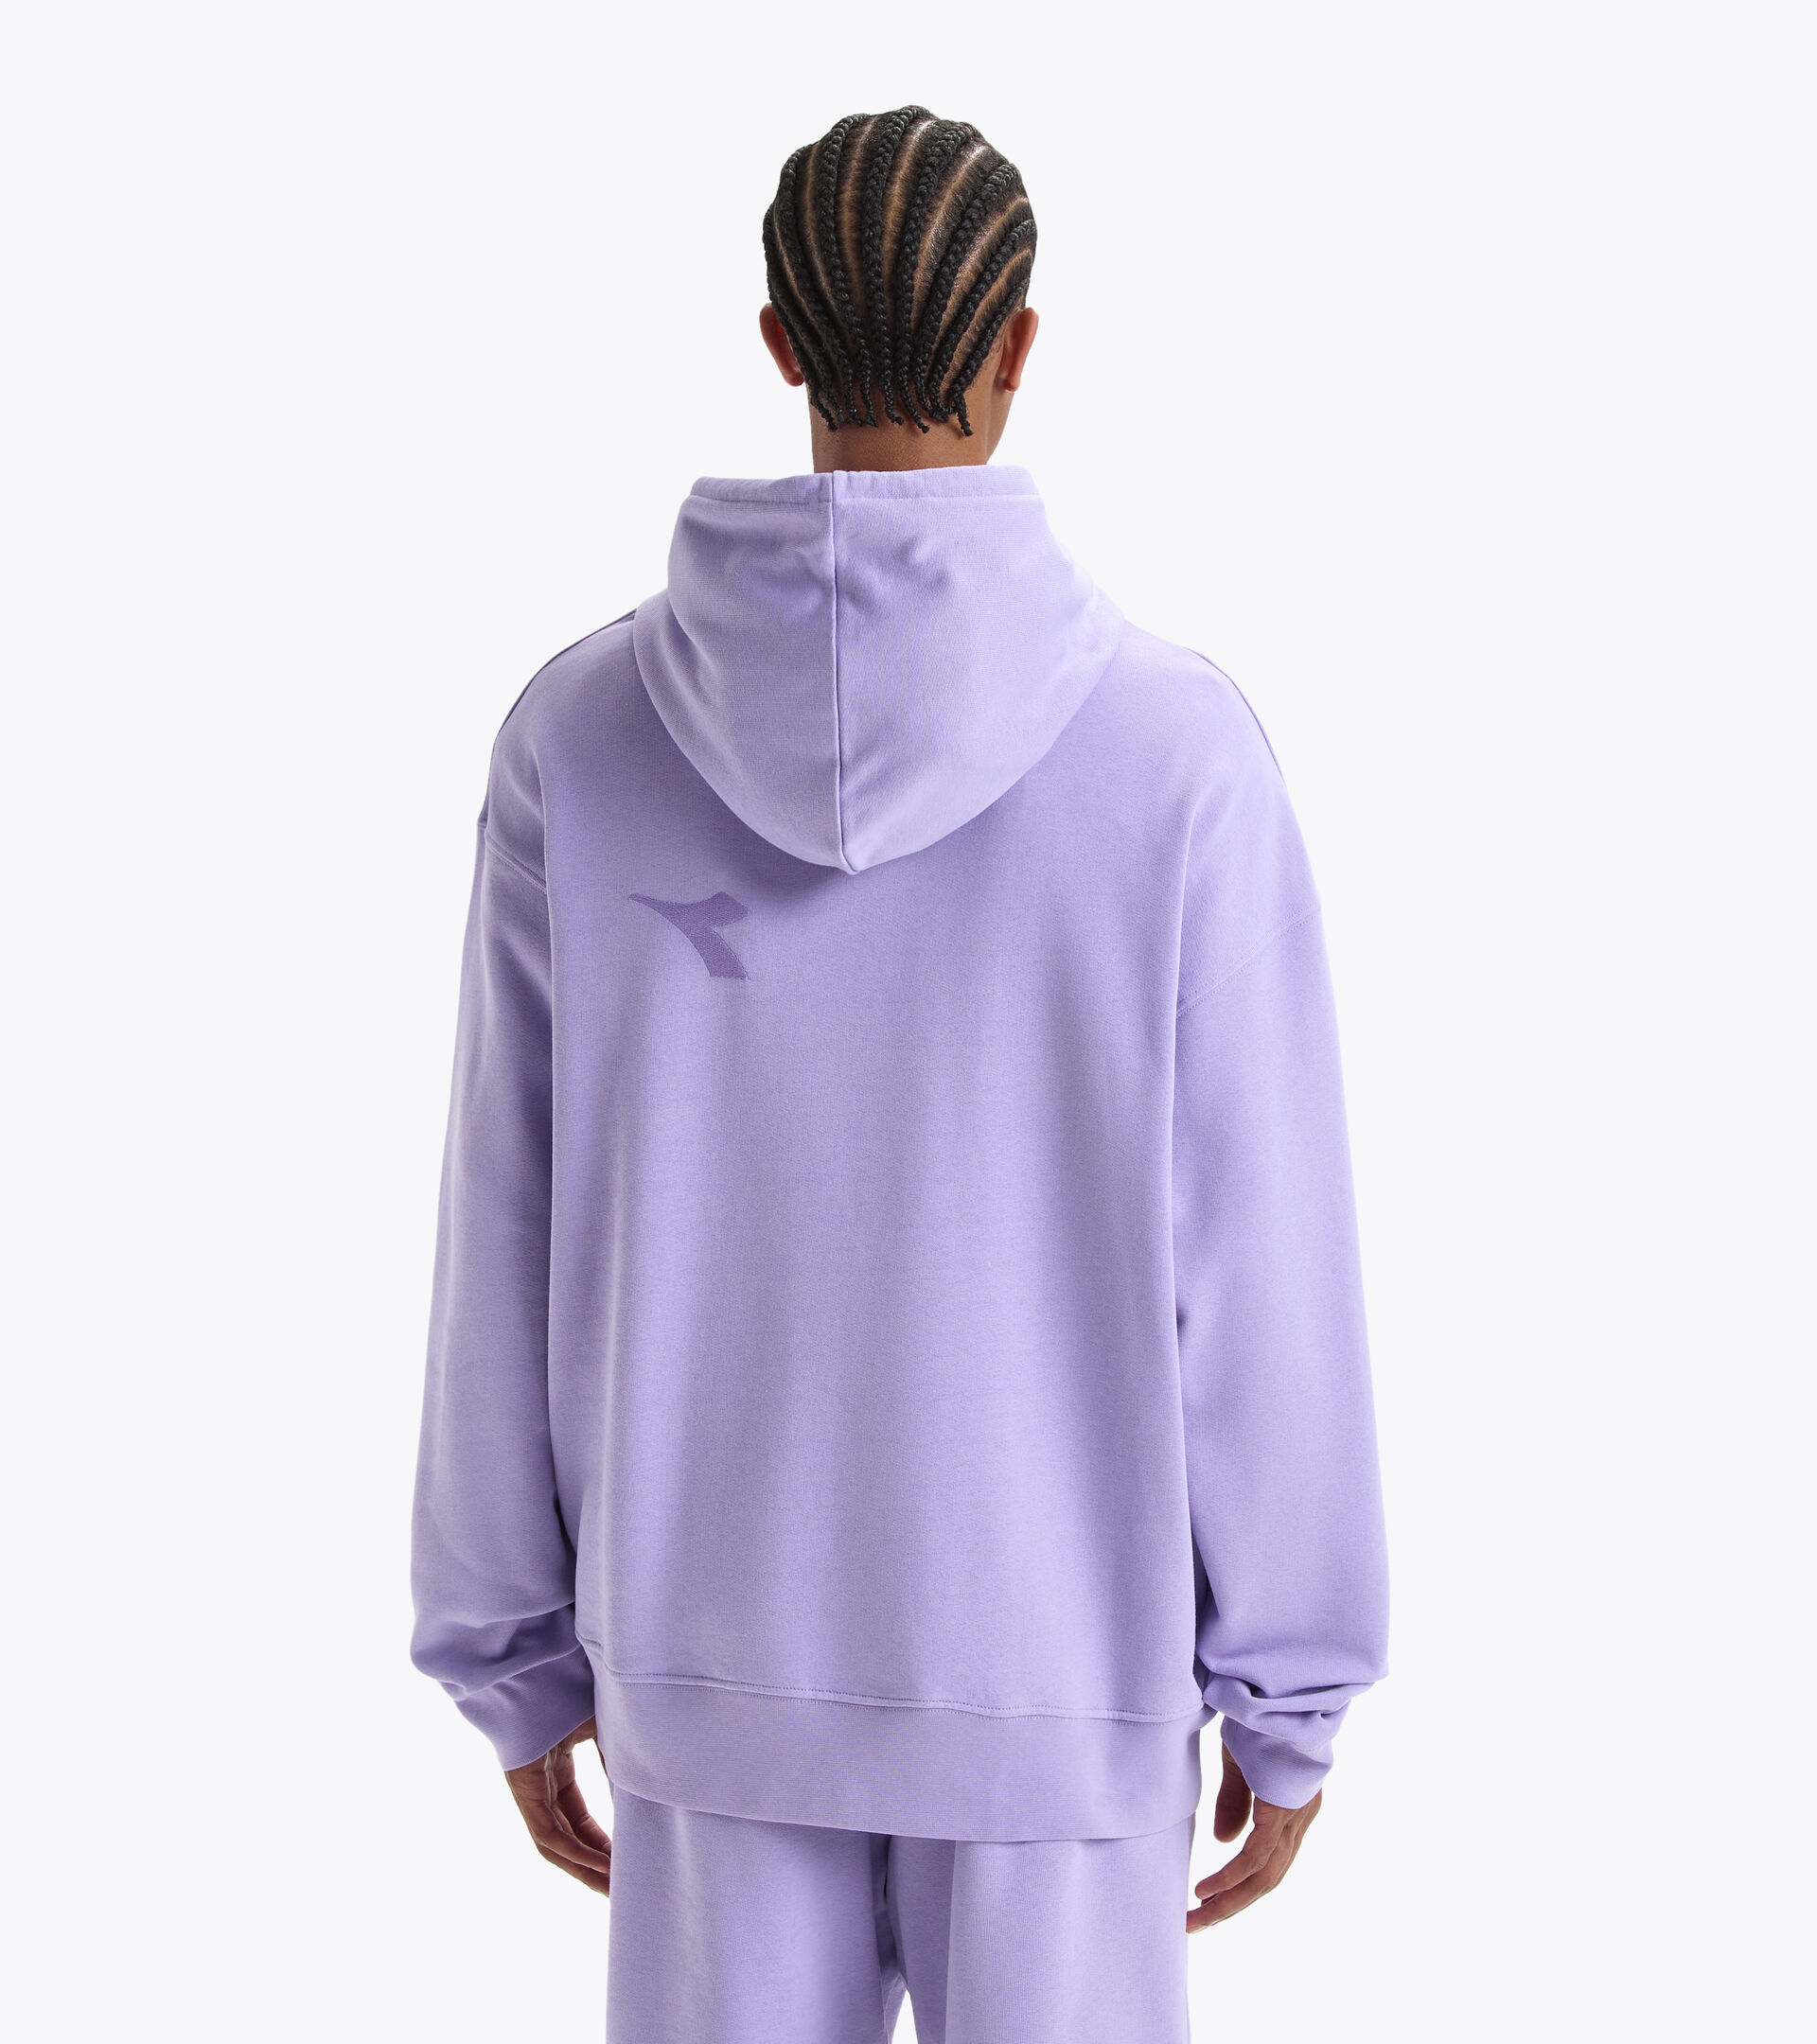 Cotton hoodie - Gender neutral HOODIE SPW LOGO PURPLE ROSE - Diadora